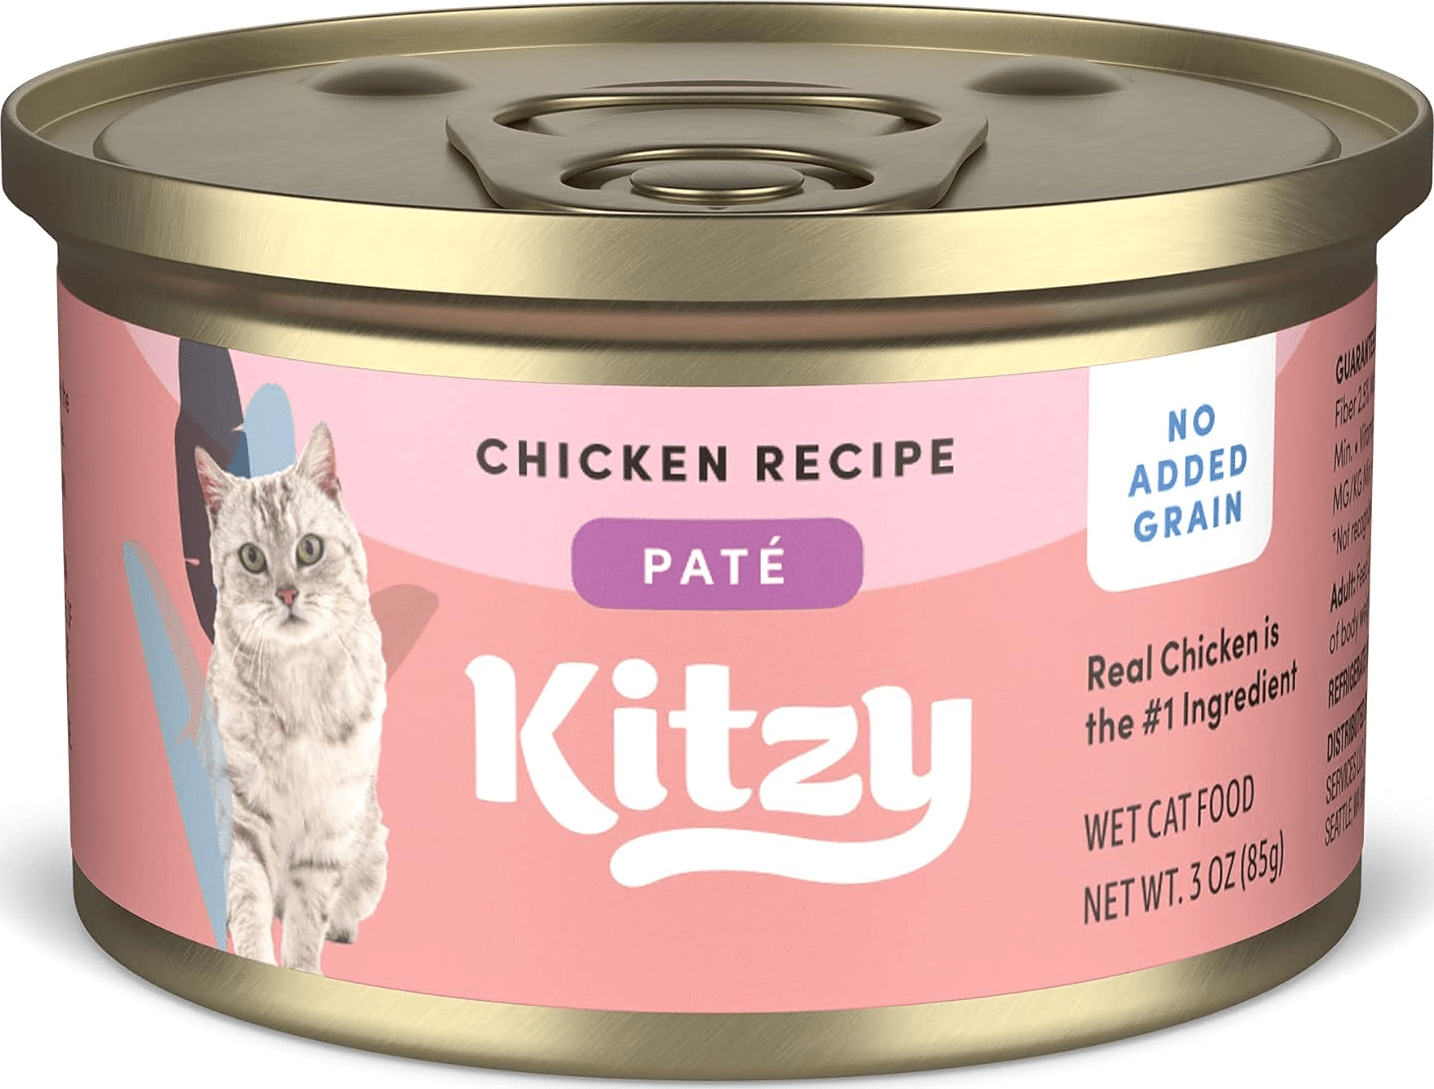 Kitzy Chicken Pate